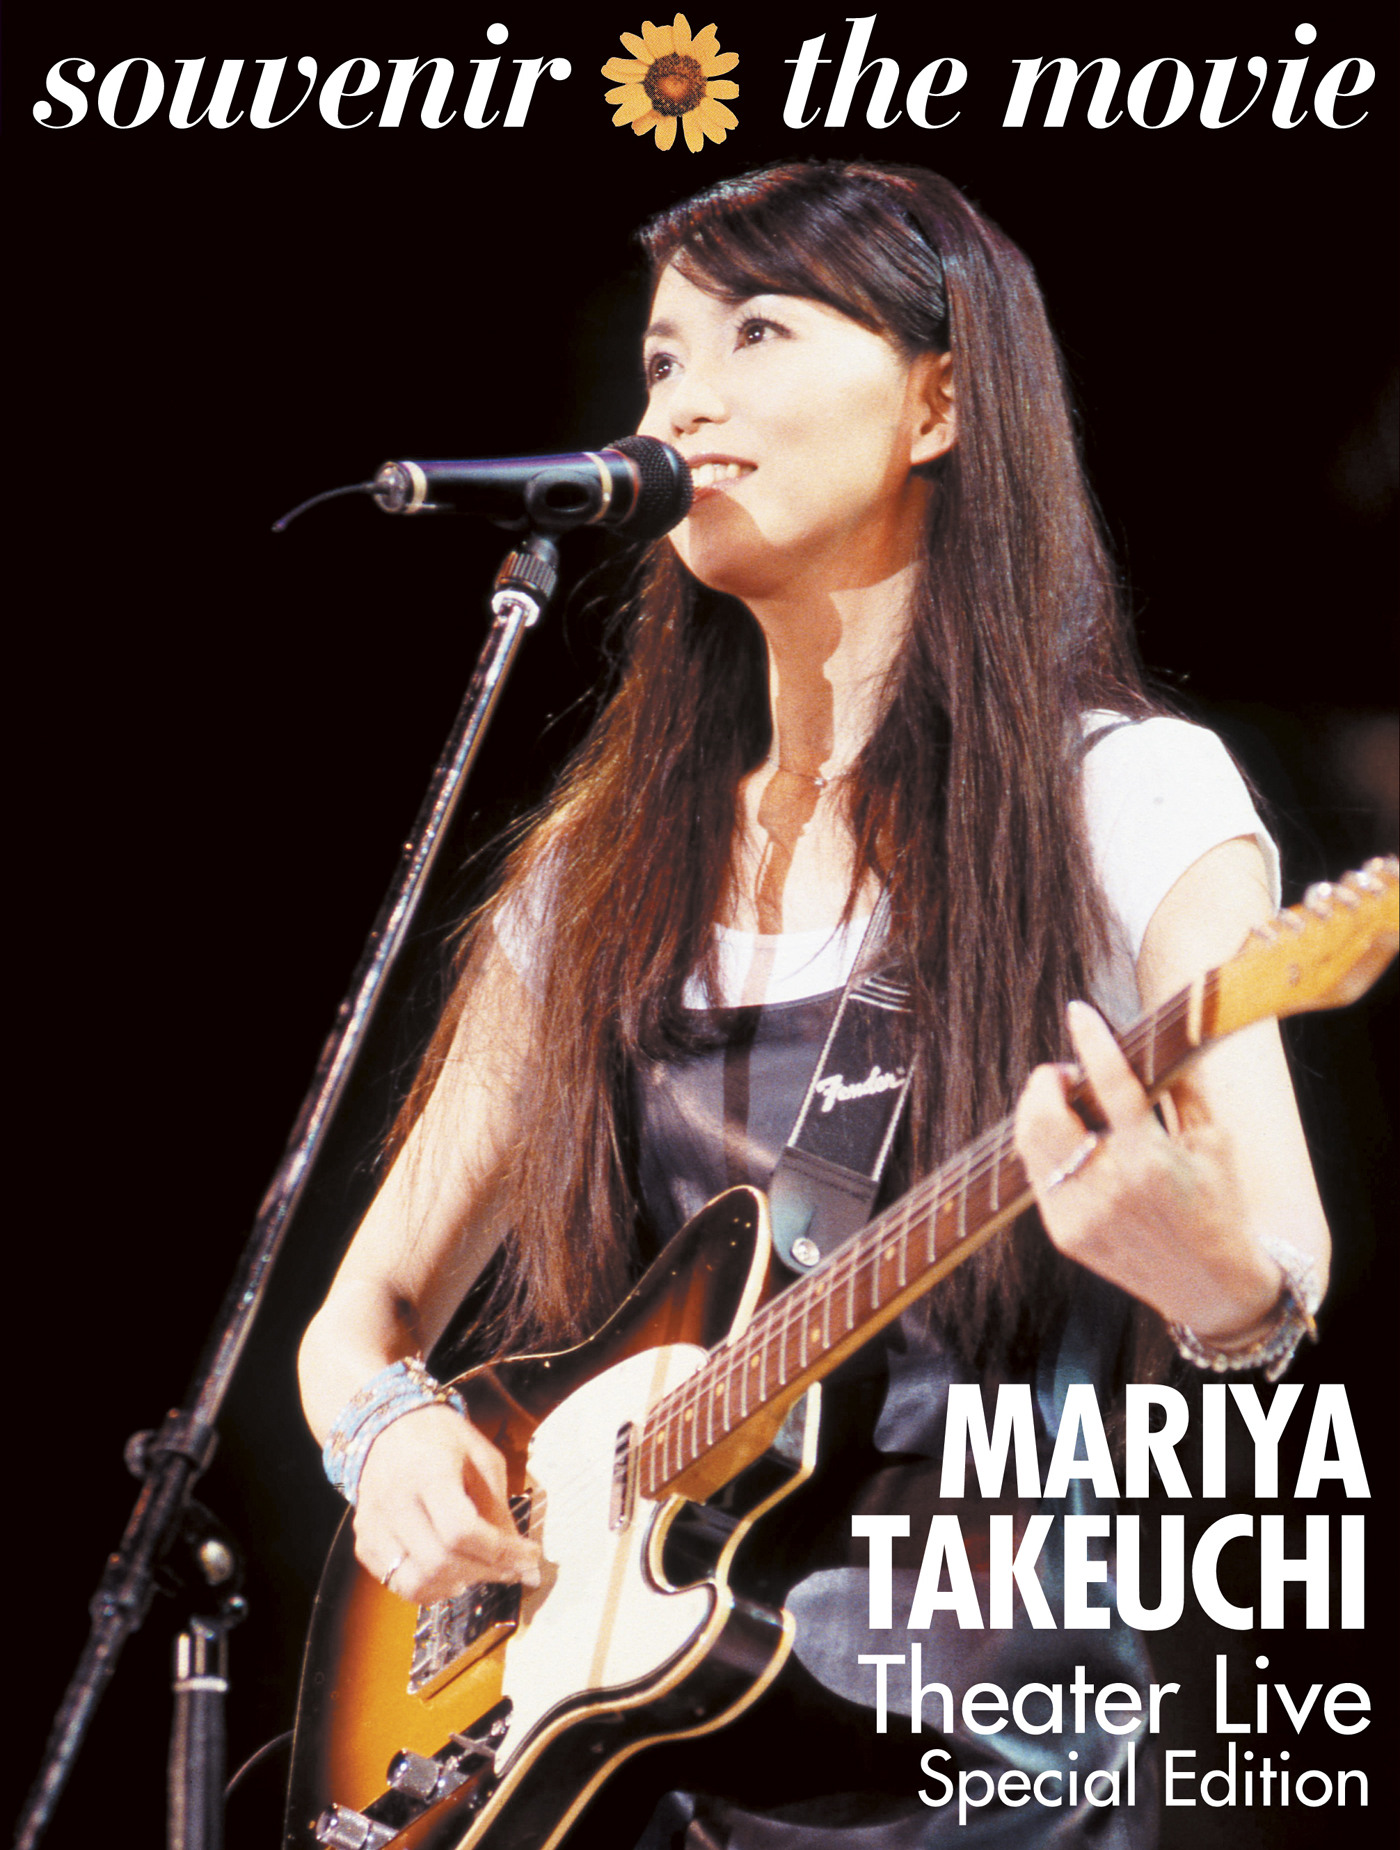 20210531.1844.25 Mariya Takeuchi - souvenir the movie ~Mariya Takeuchi Theater Live~ (Special edition) (2020) (Blu-Ray) cover.jpg